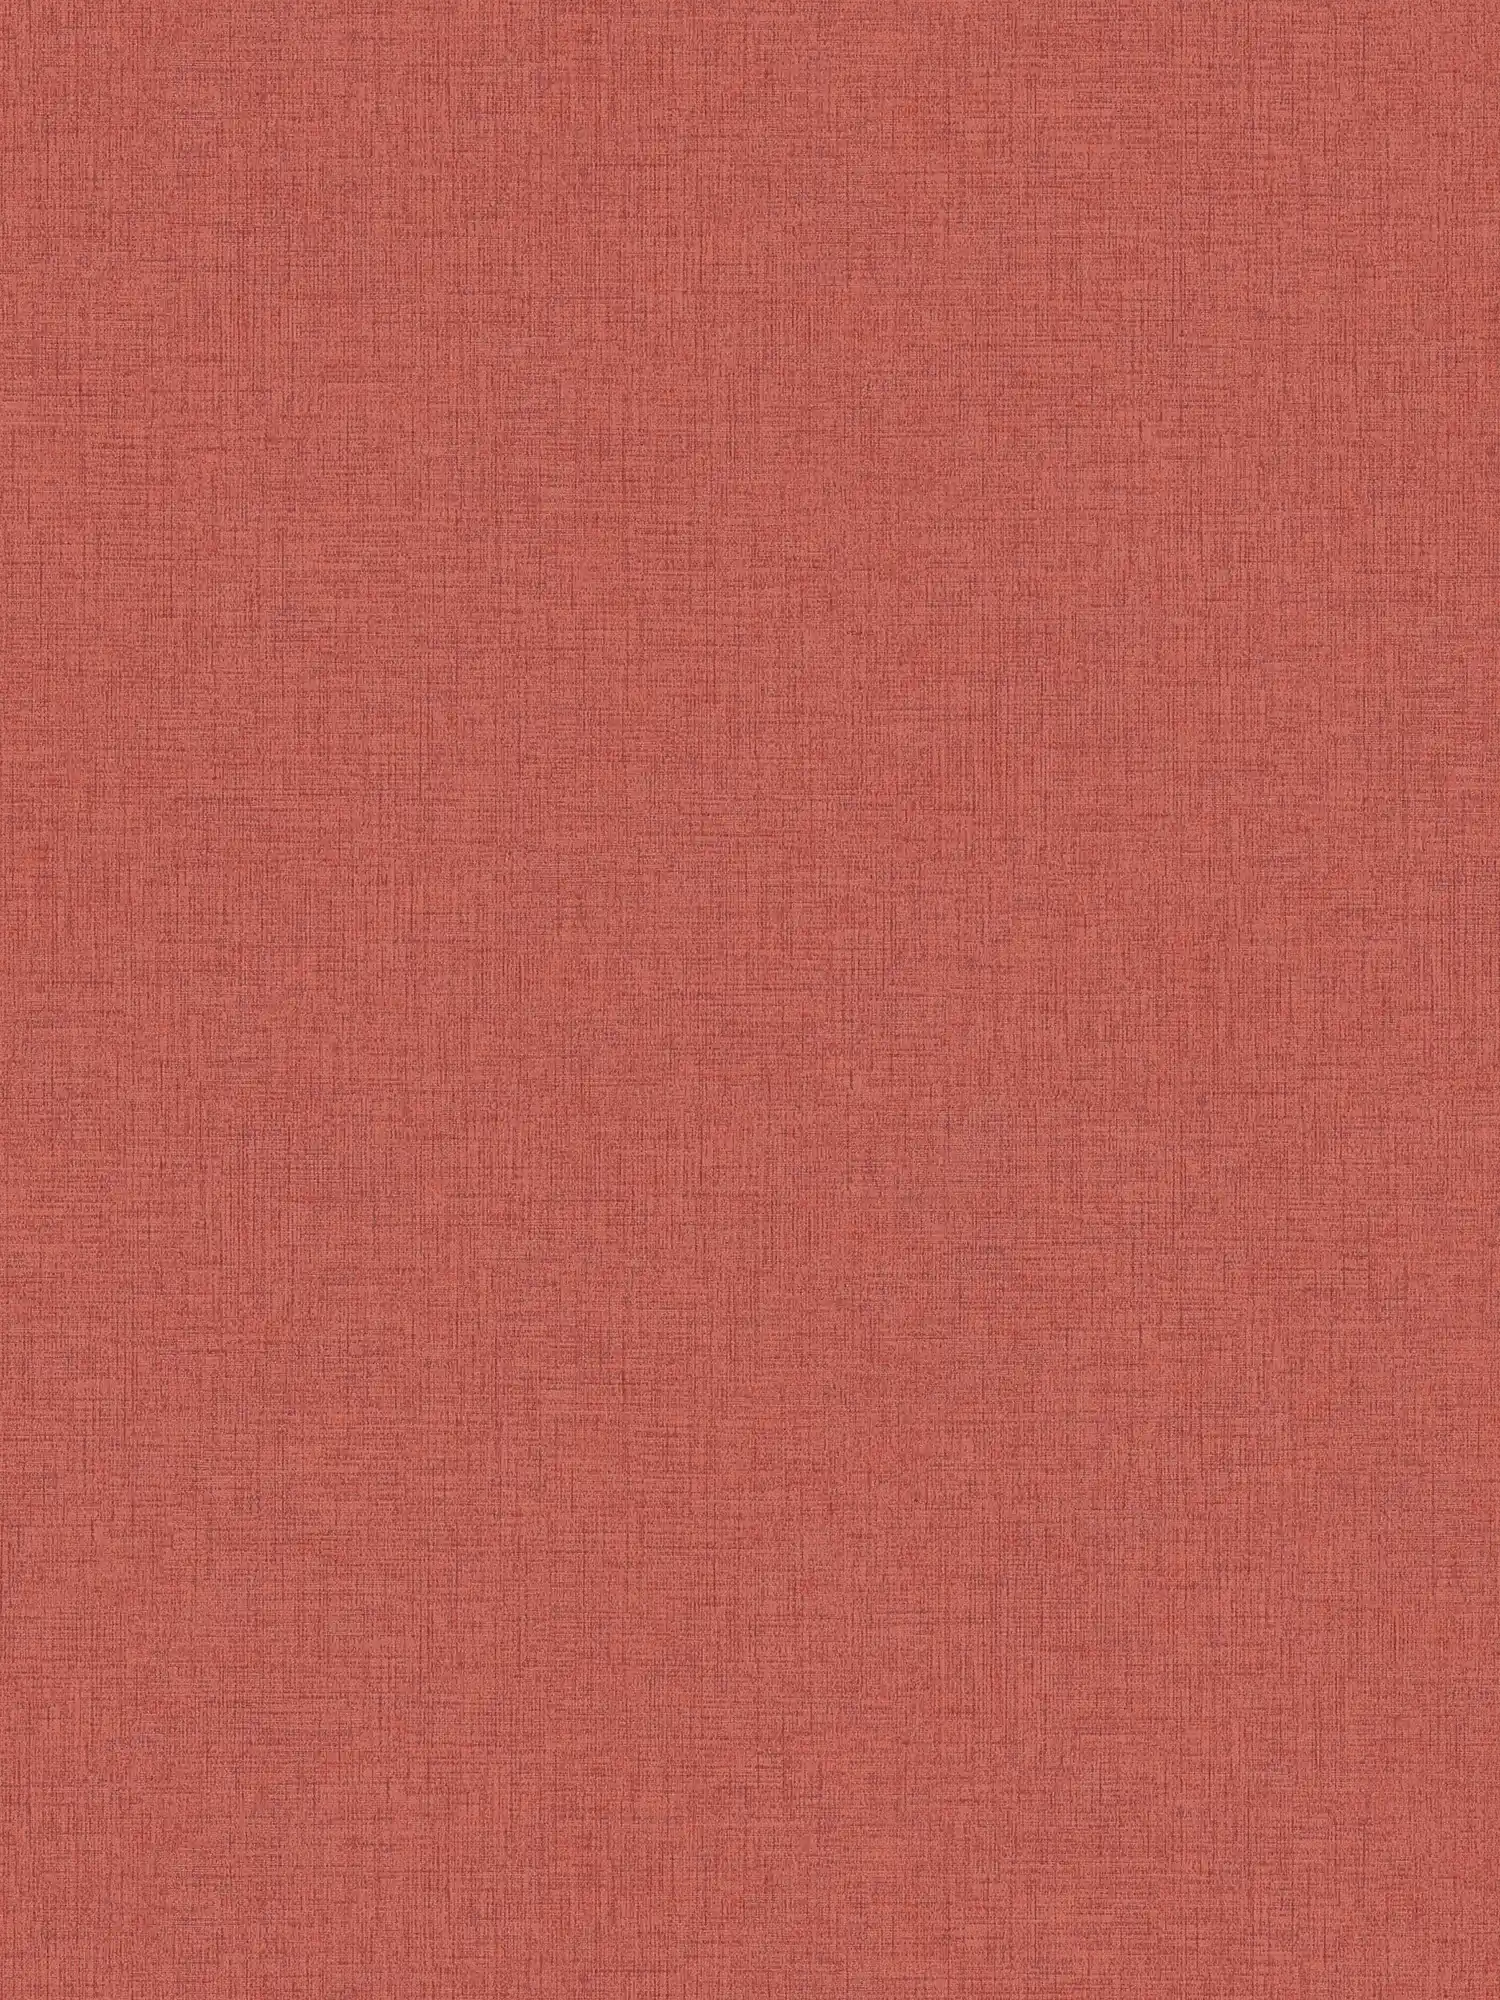 Papel pintado no tejido liso con aspecto textil - rojo
